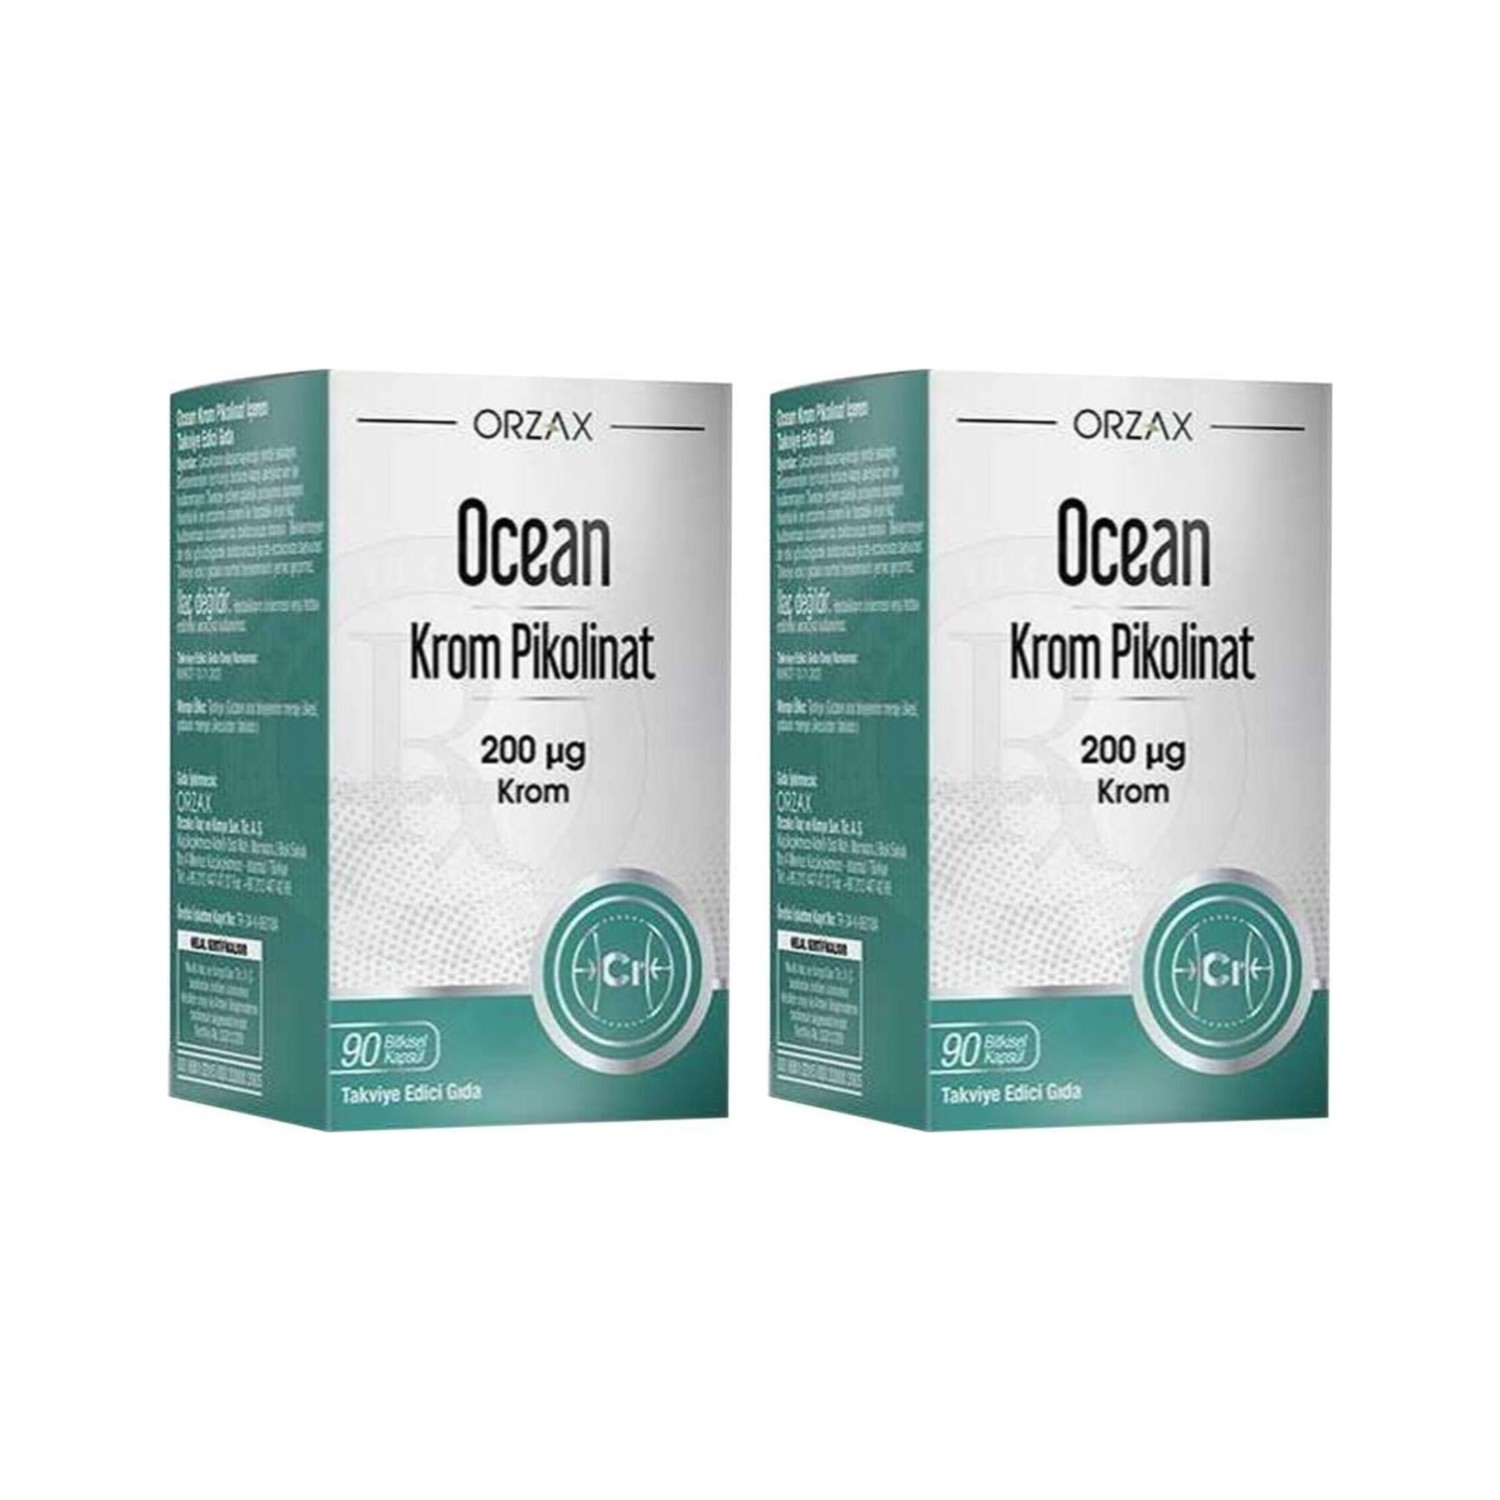 цена Пиколинат хрома Ocean 200 мкг, 2 упаковки по 90 капсул